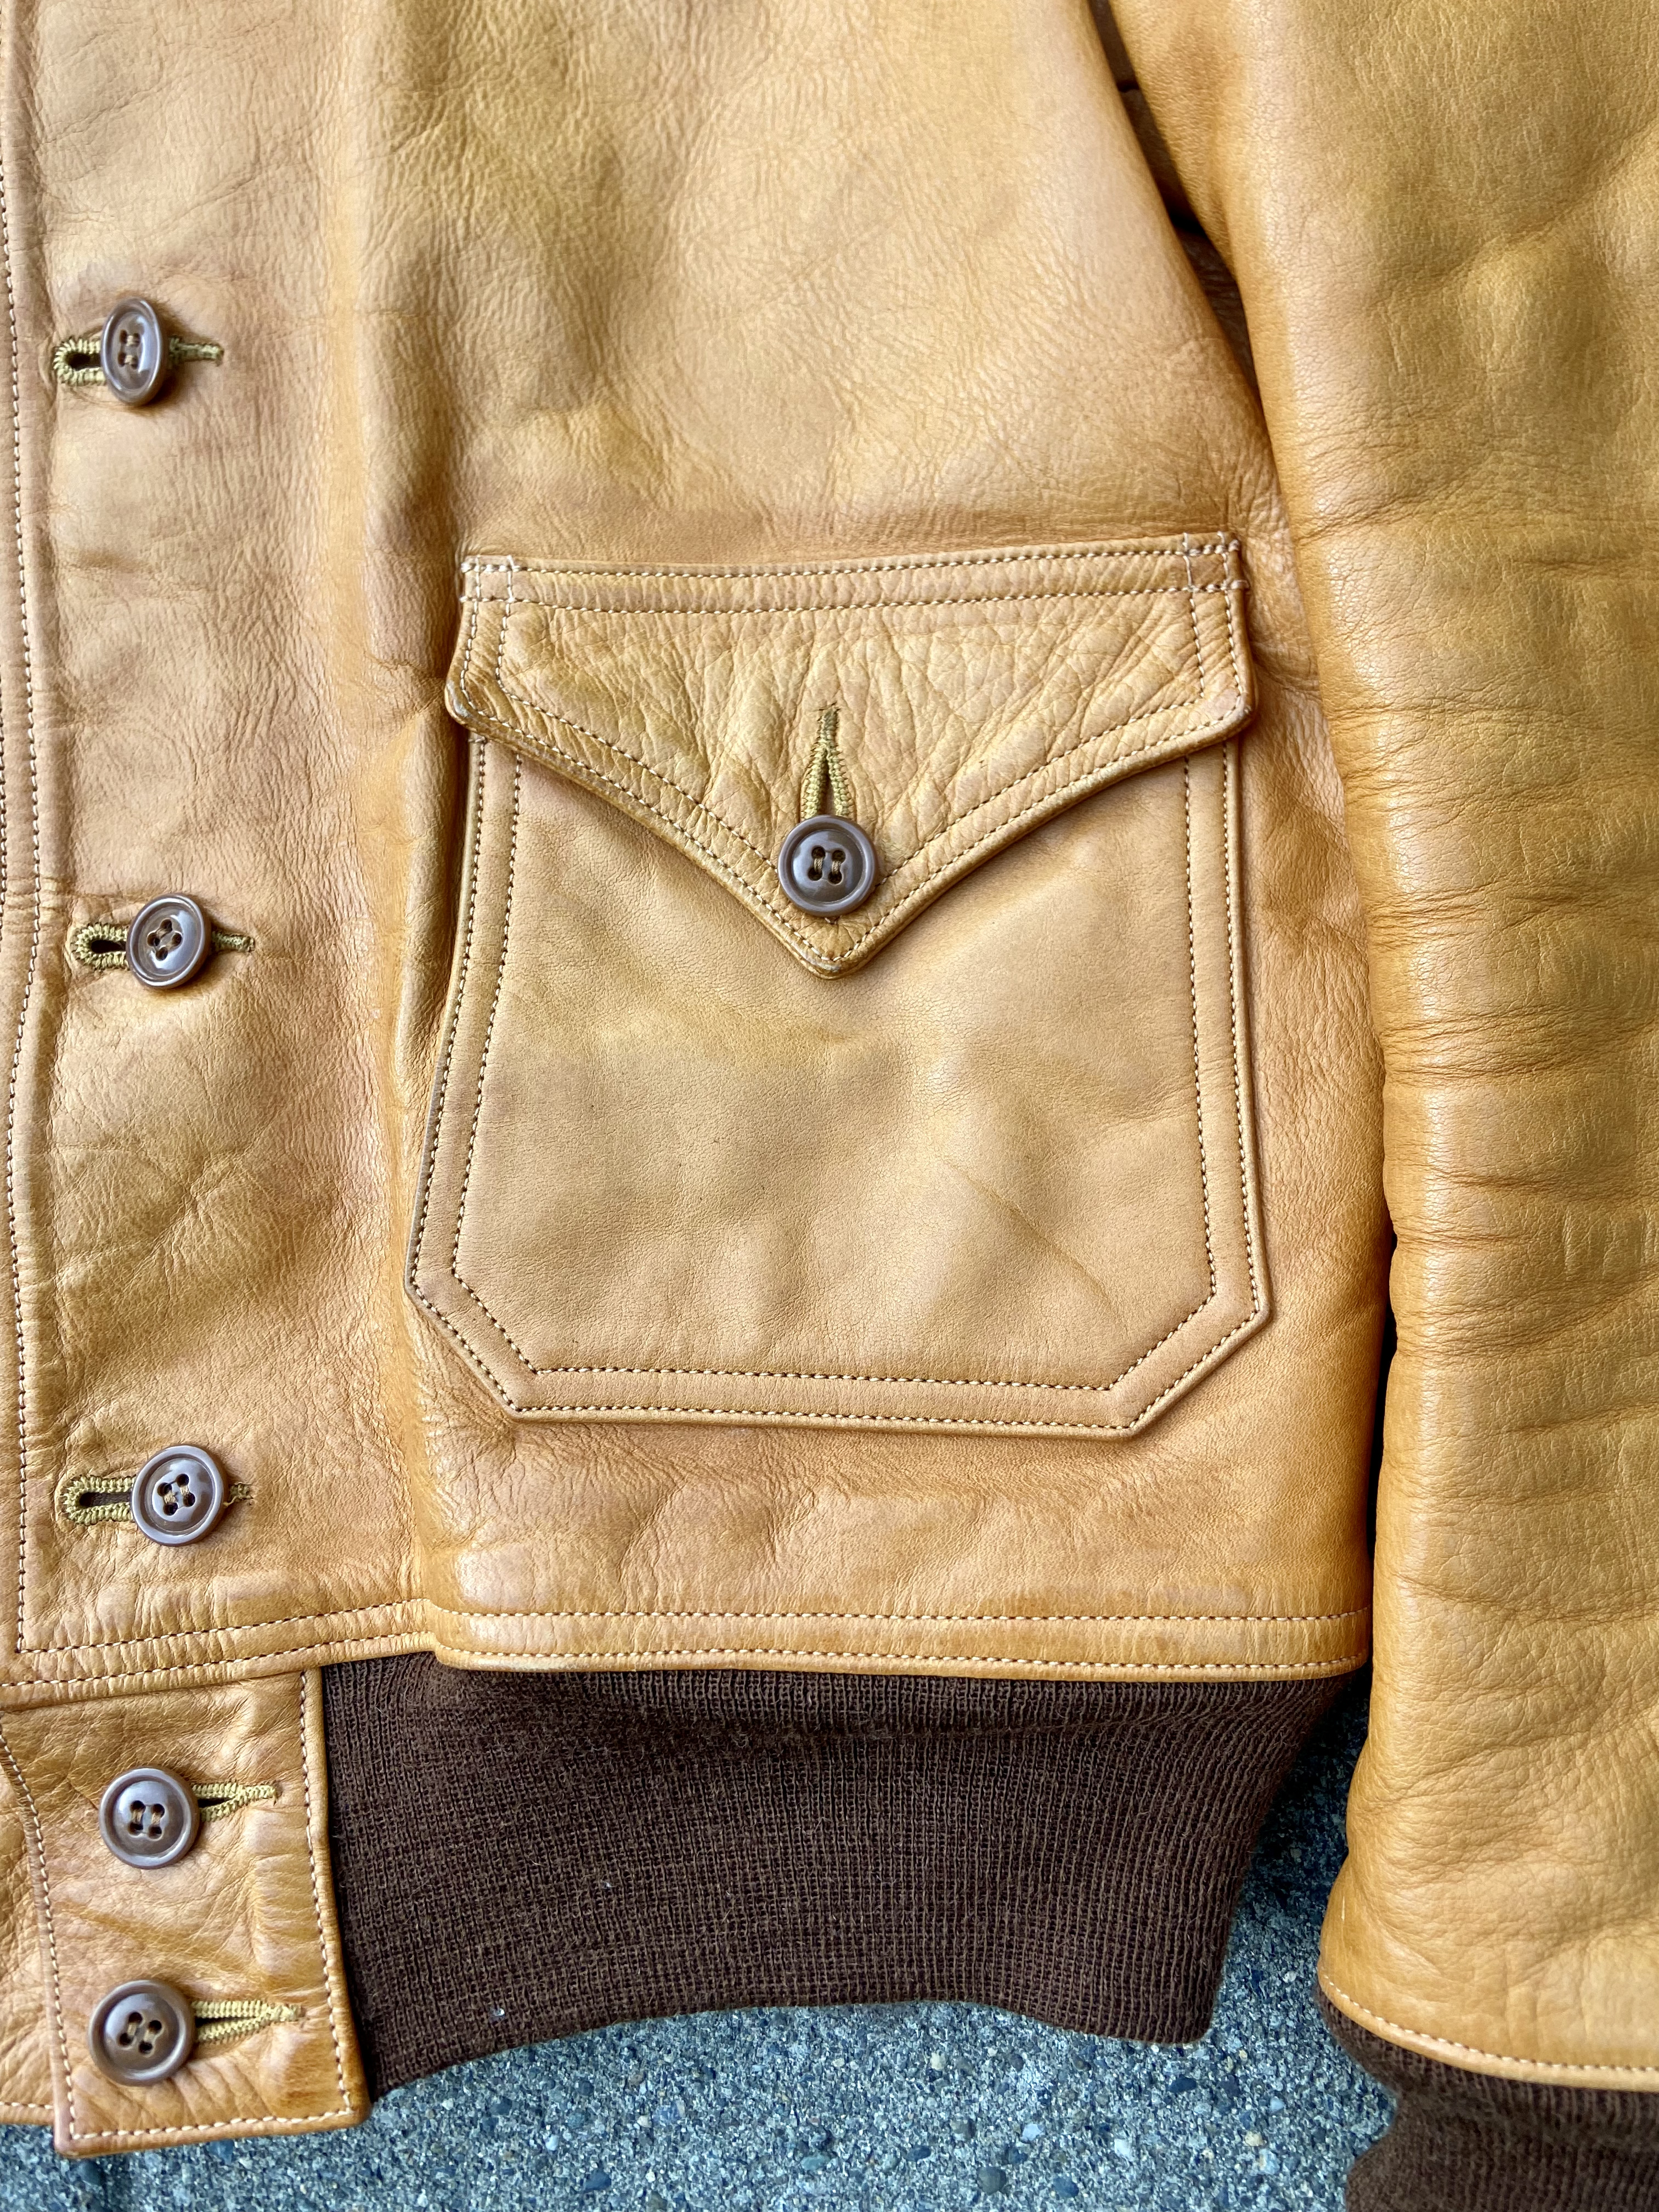 Freewheelers A-1 1928 Jacket Gold Brown Horsehide Leather Shinki 